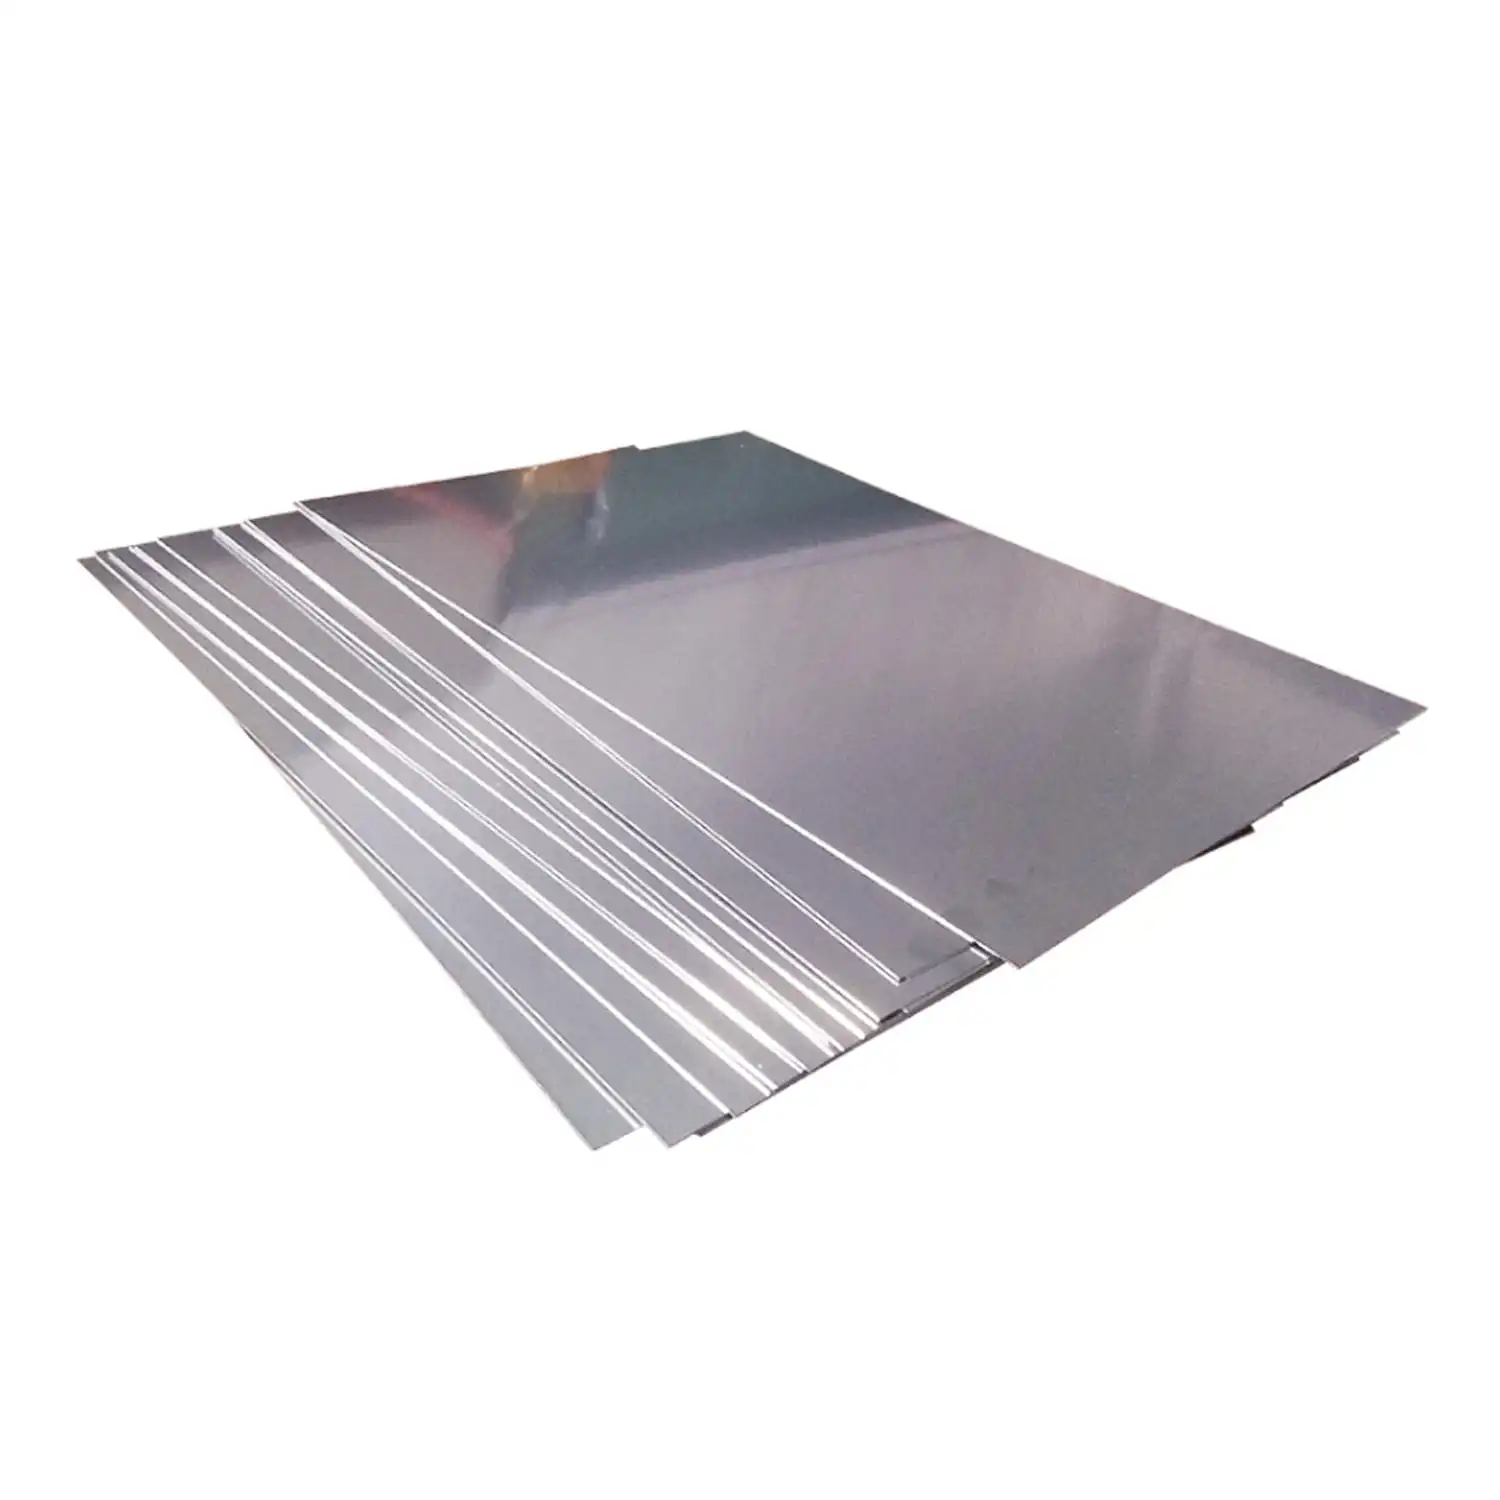 22 Gauge galvanized sheet metal galvanized sheet price 1mm Gi plate hot dipped galvanizes steel sheet price gi coil door roll